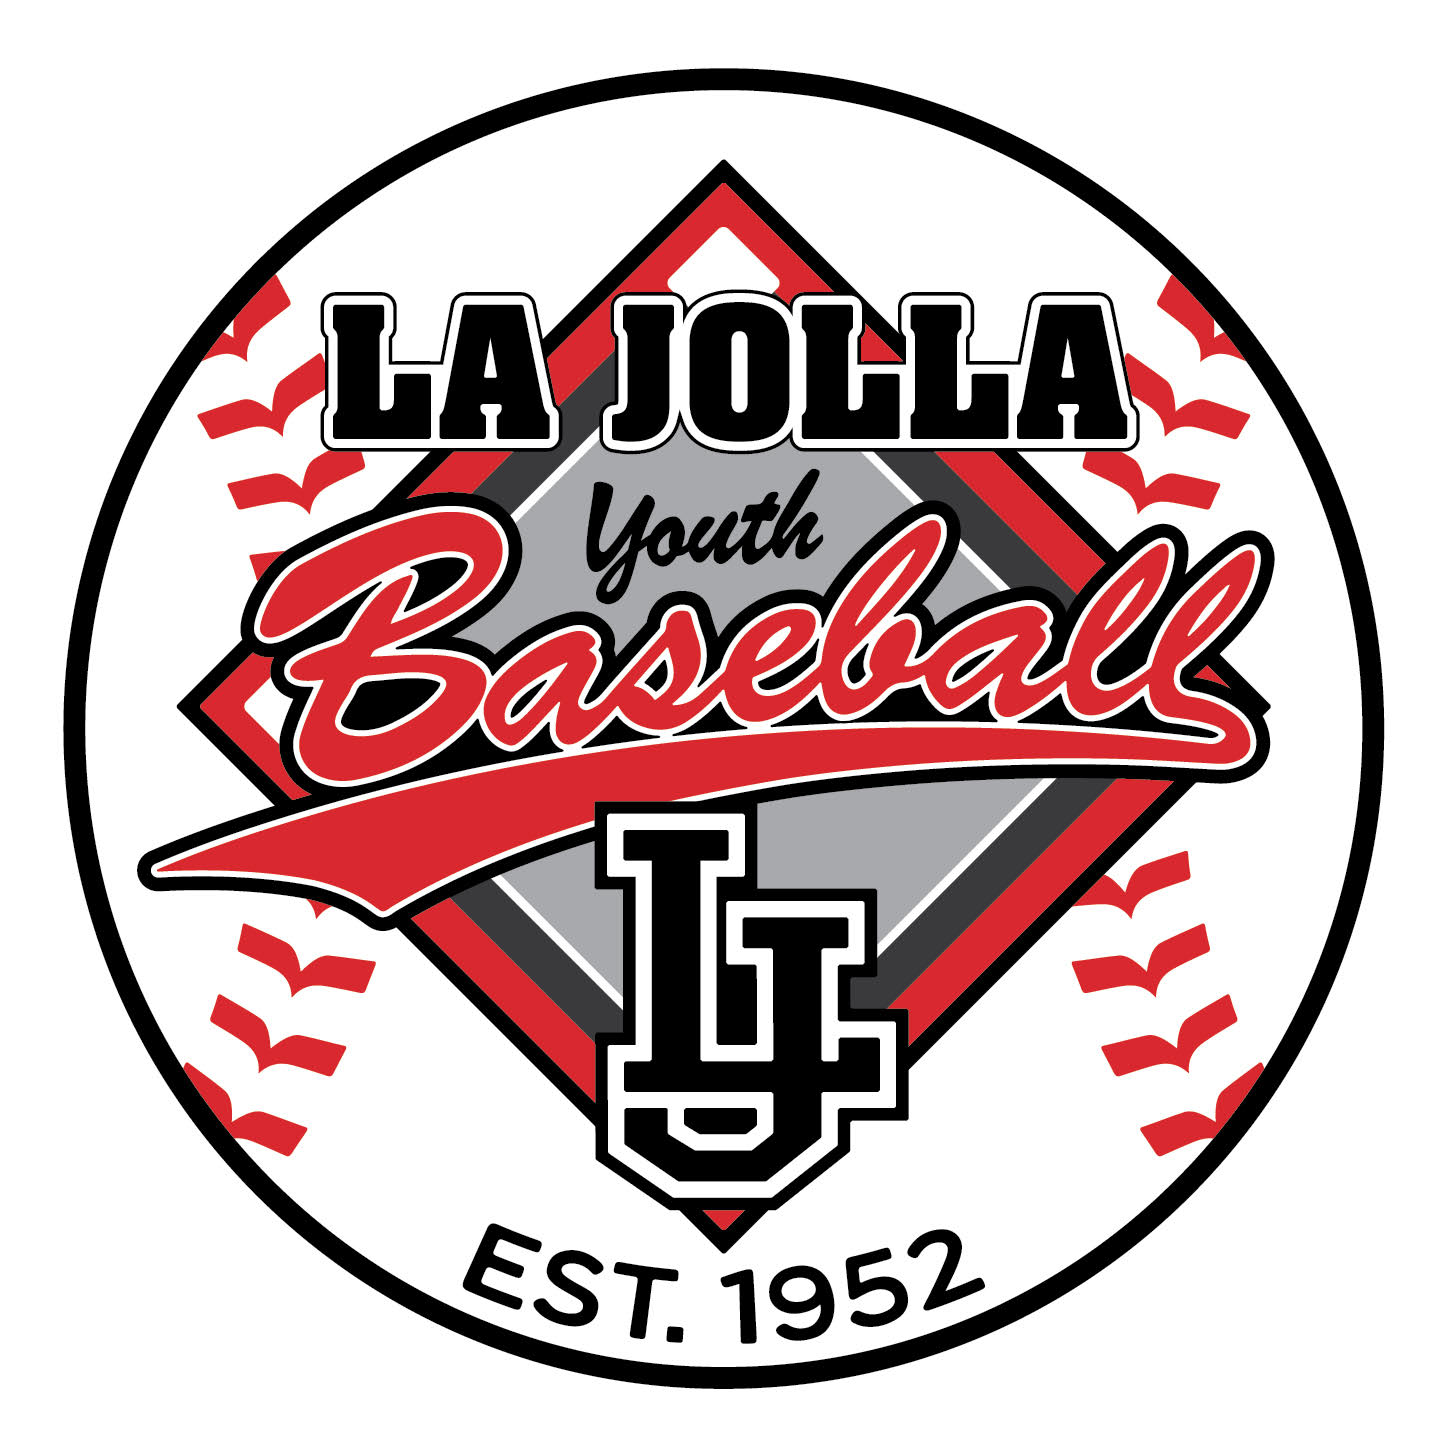 La Jolla Youth Baseball is awarded Friendship Games partnership with Japan  - La Jolla Light